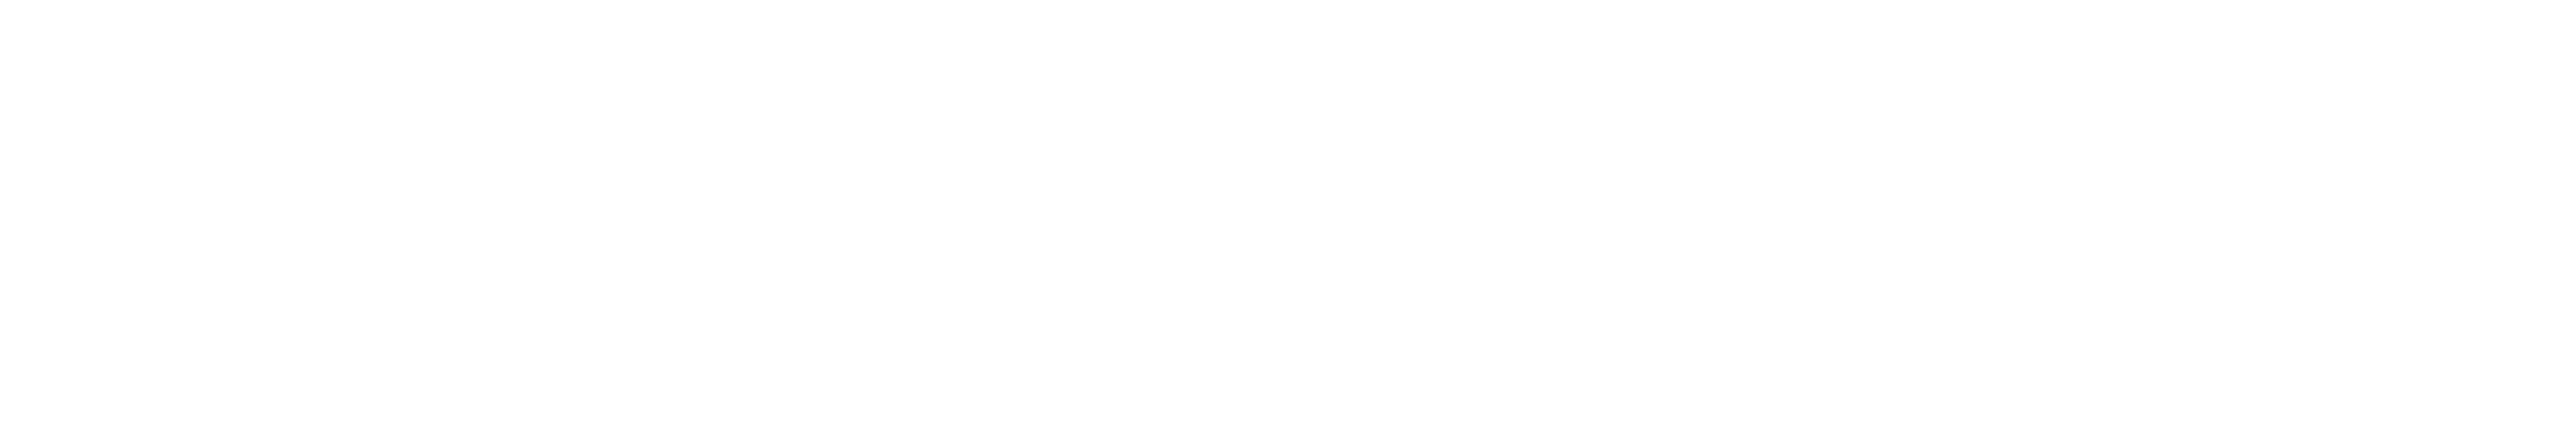 Wonderphil Entertainment Logo